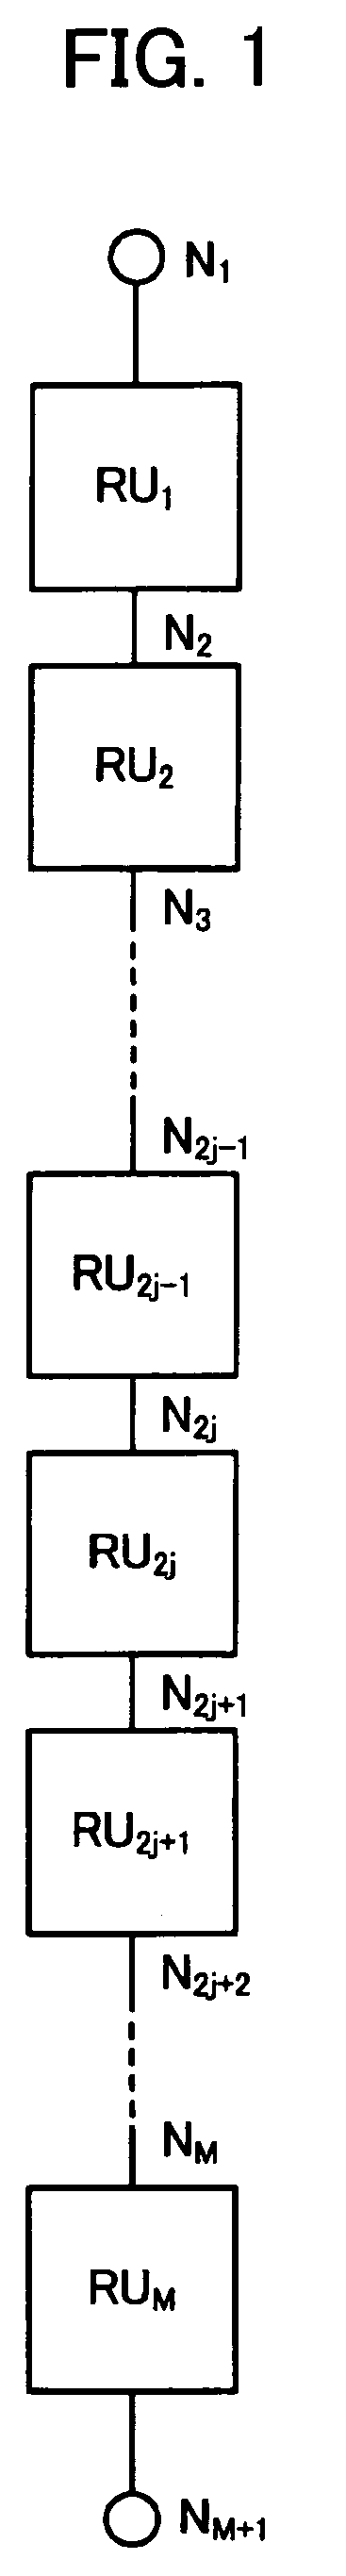 Resistor circuit and oscillation circuit